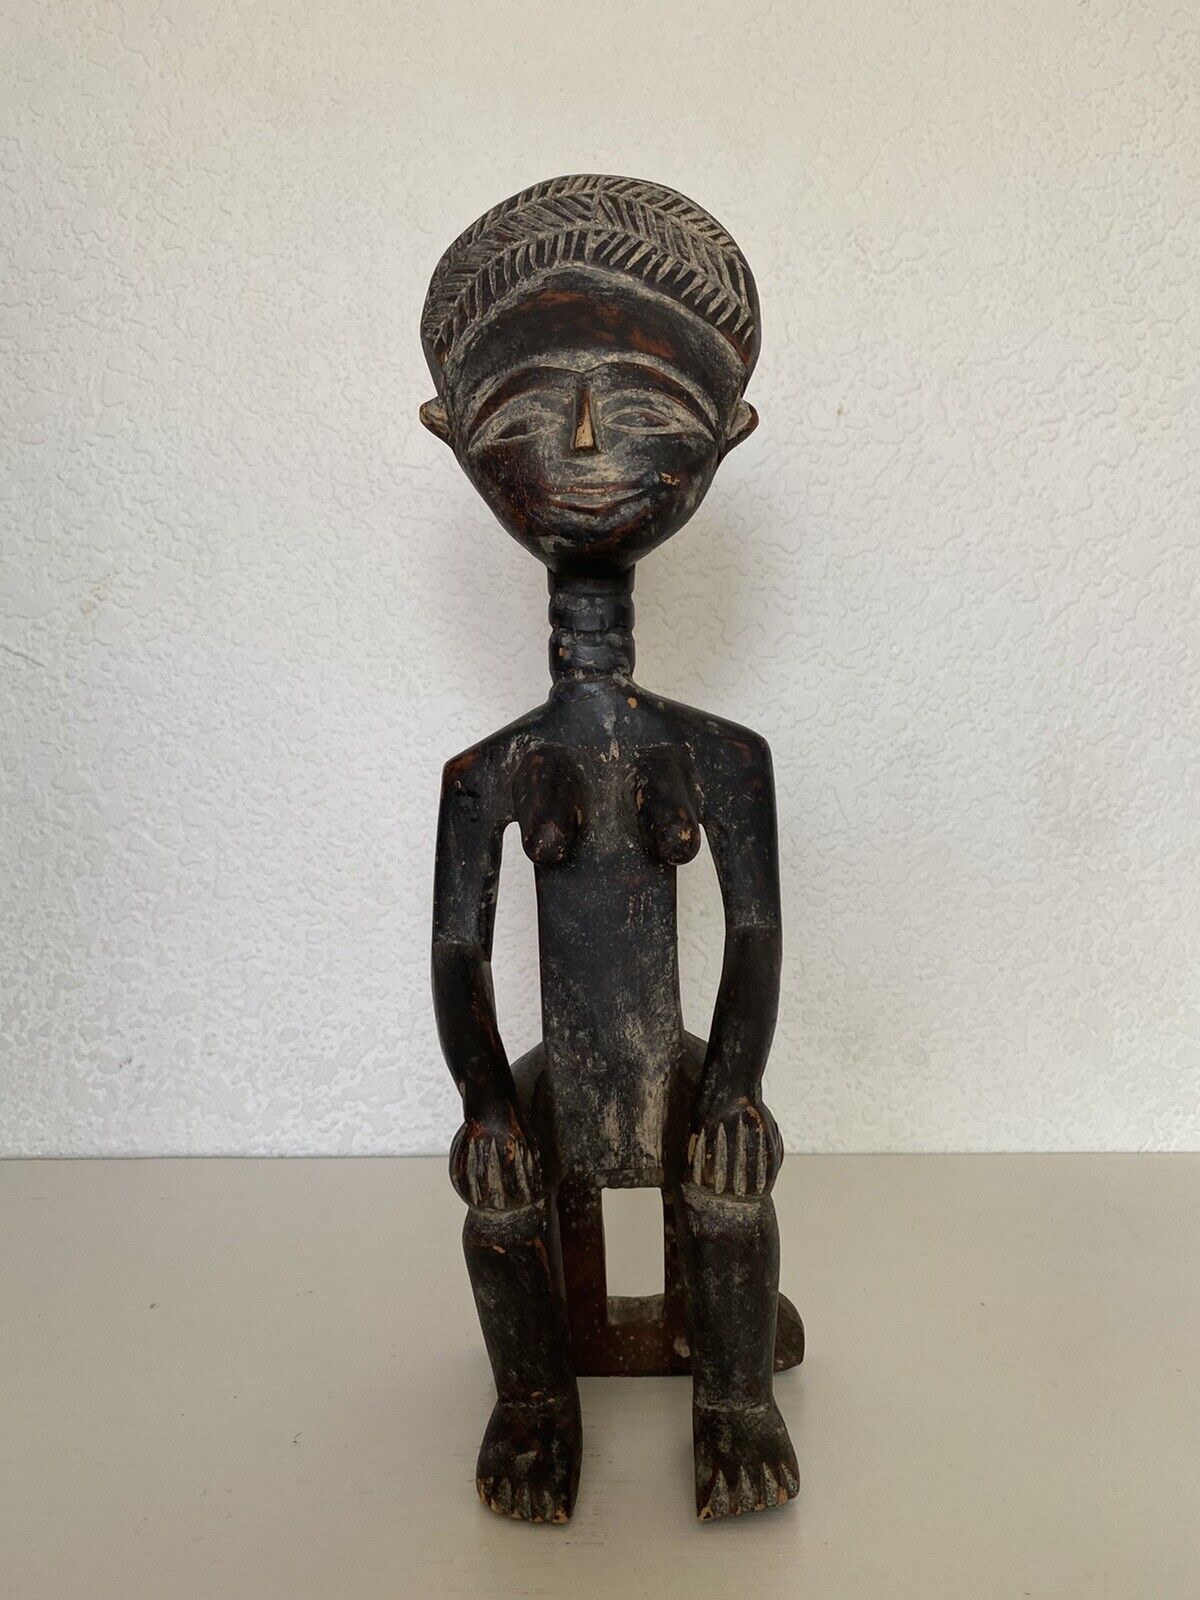 Artifact Sculpture, Asante/Akan People- Ivory Coast Maternity Figure Sculpture